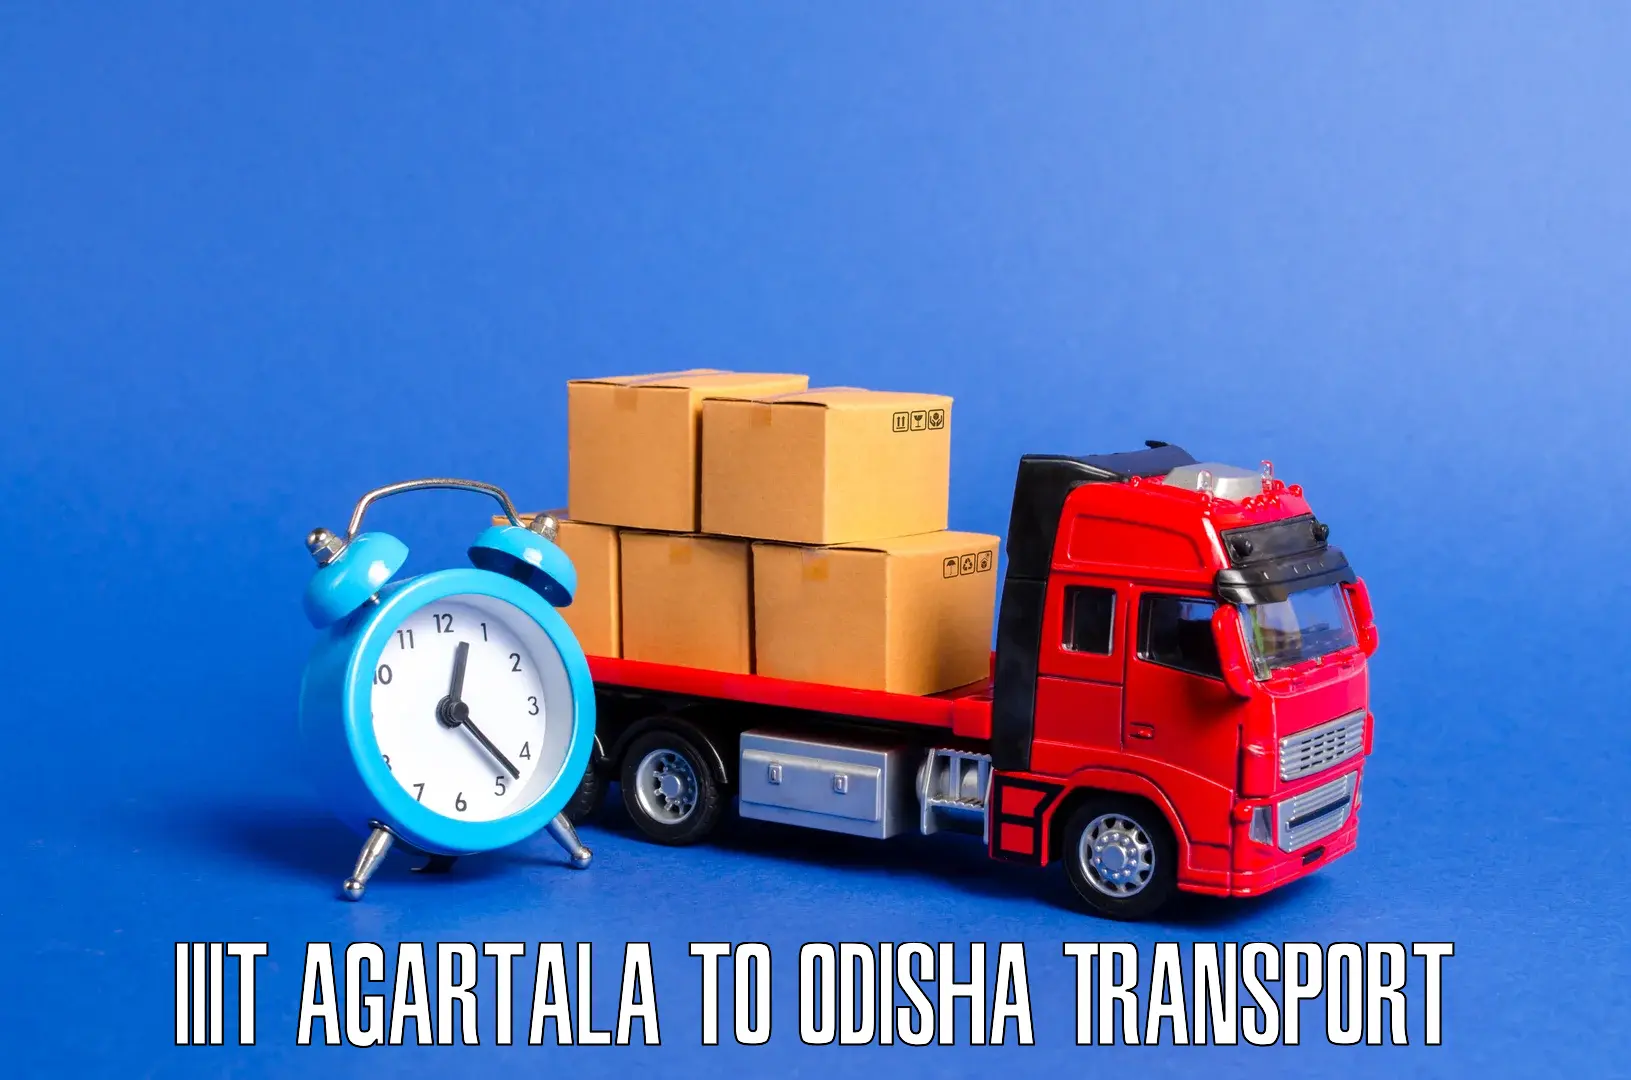 Cycle transportation service IIIT Agartala to Barkote